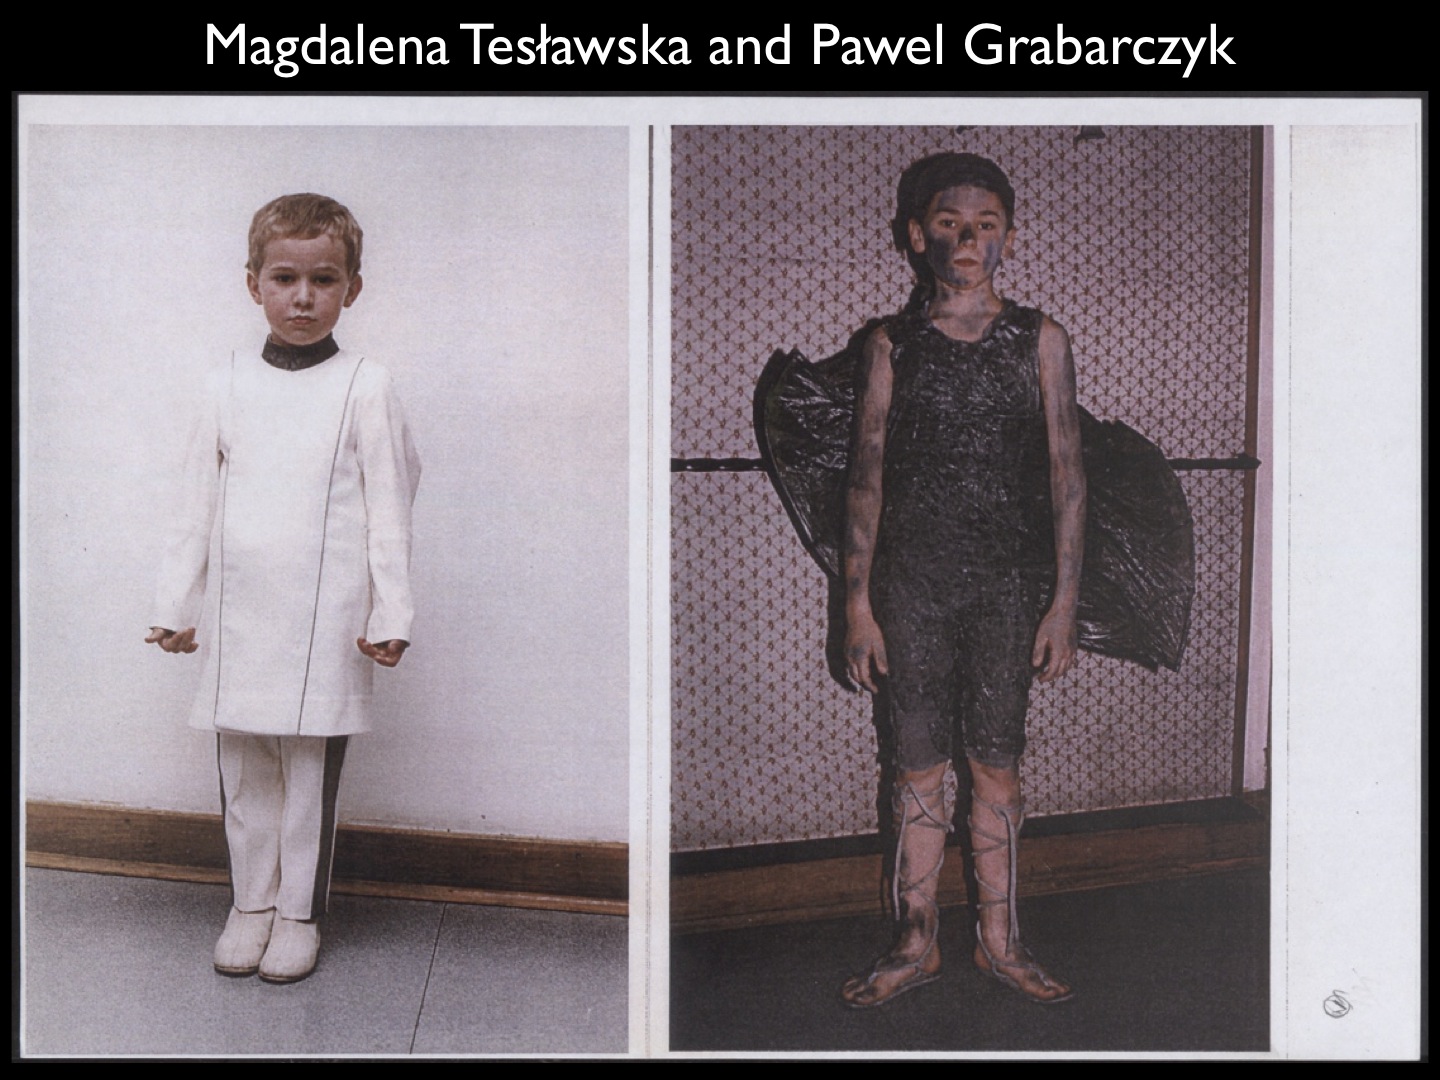 Gallery - Poland Exhibit - Magdalena Teslawska and Pawel Grabarczyk